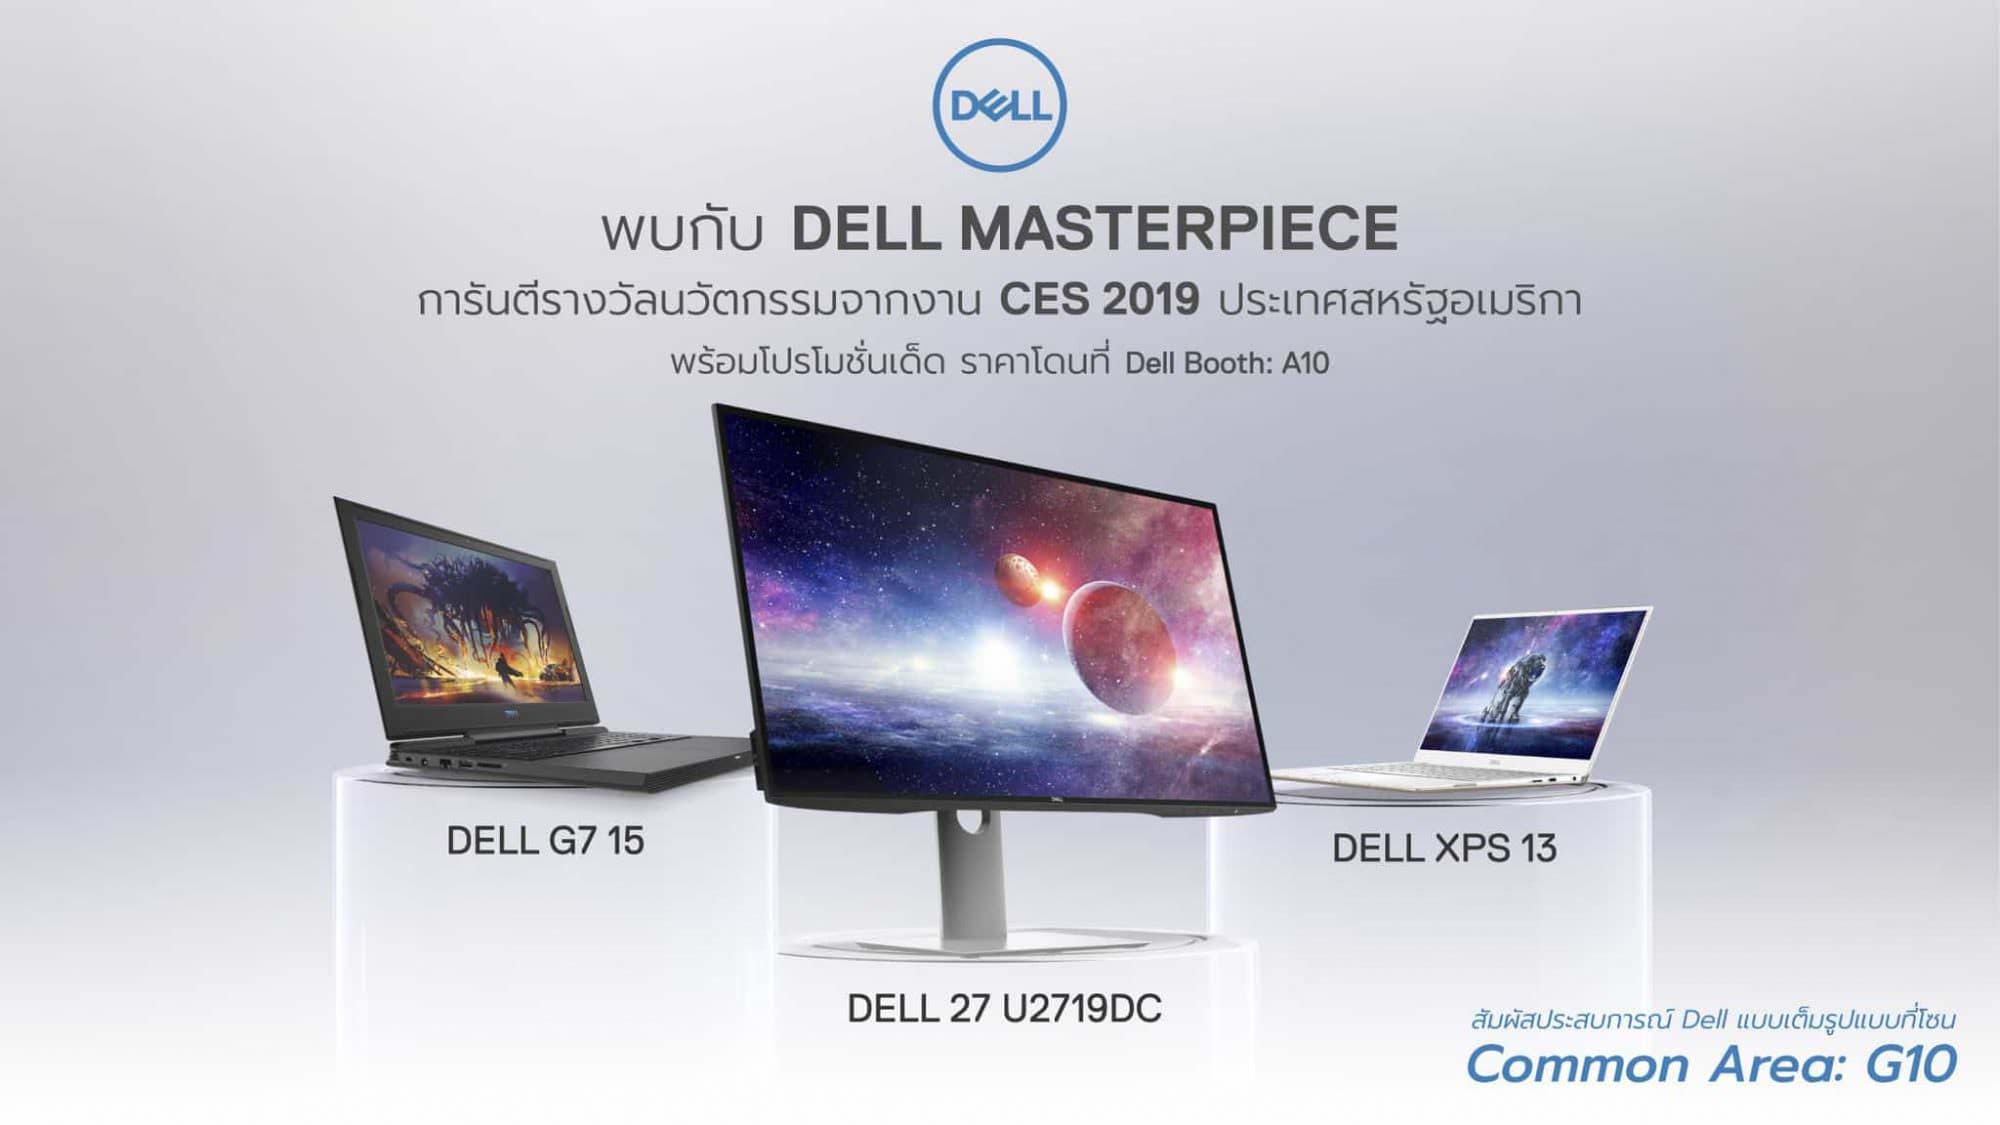 DELL จัดโปรในงาน Commart Connect 2019 ไบเทค บางนา เปิดตัว XPS 13 2019, Dell G Series (G7 15) และ Dell UltraSharp 27 USB-C Monitor ในงาน 1